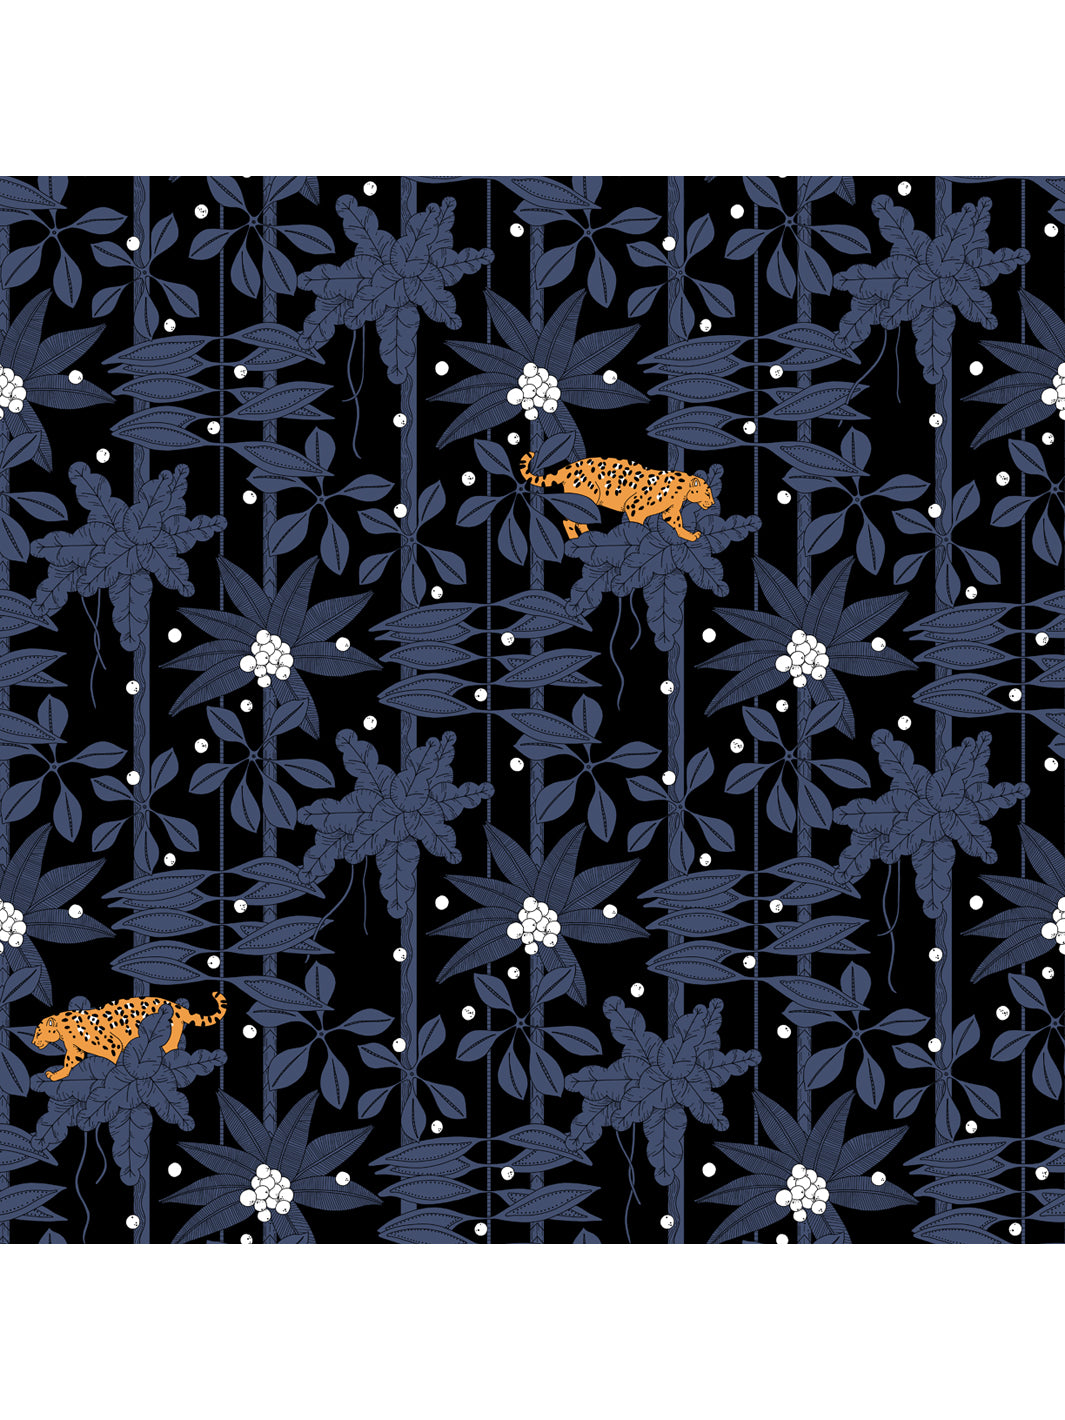 Muestras de papel tapiz de jaguar